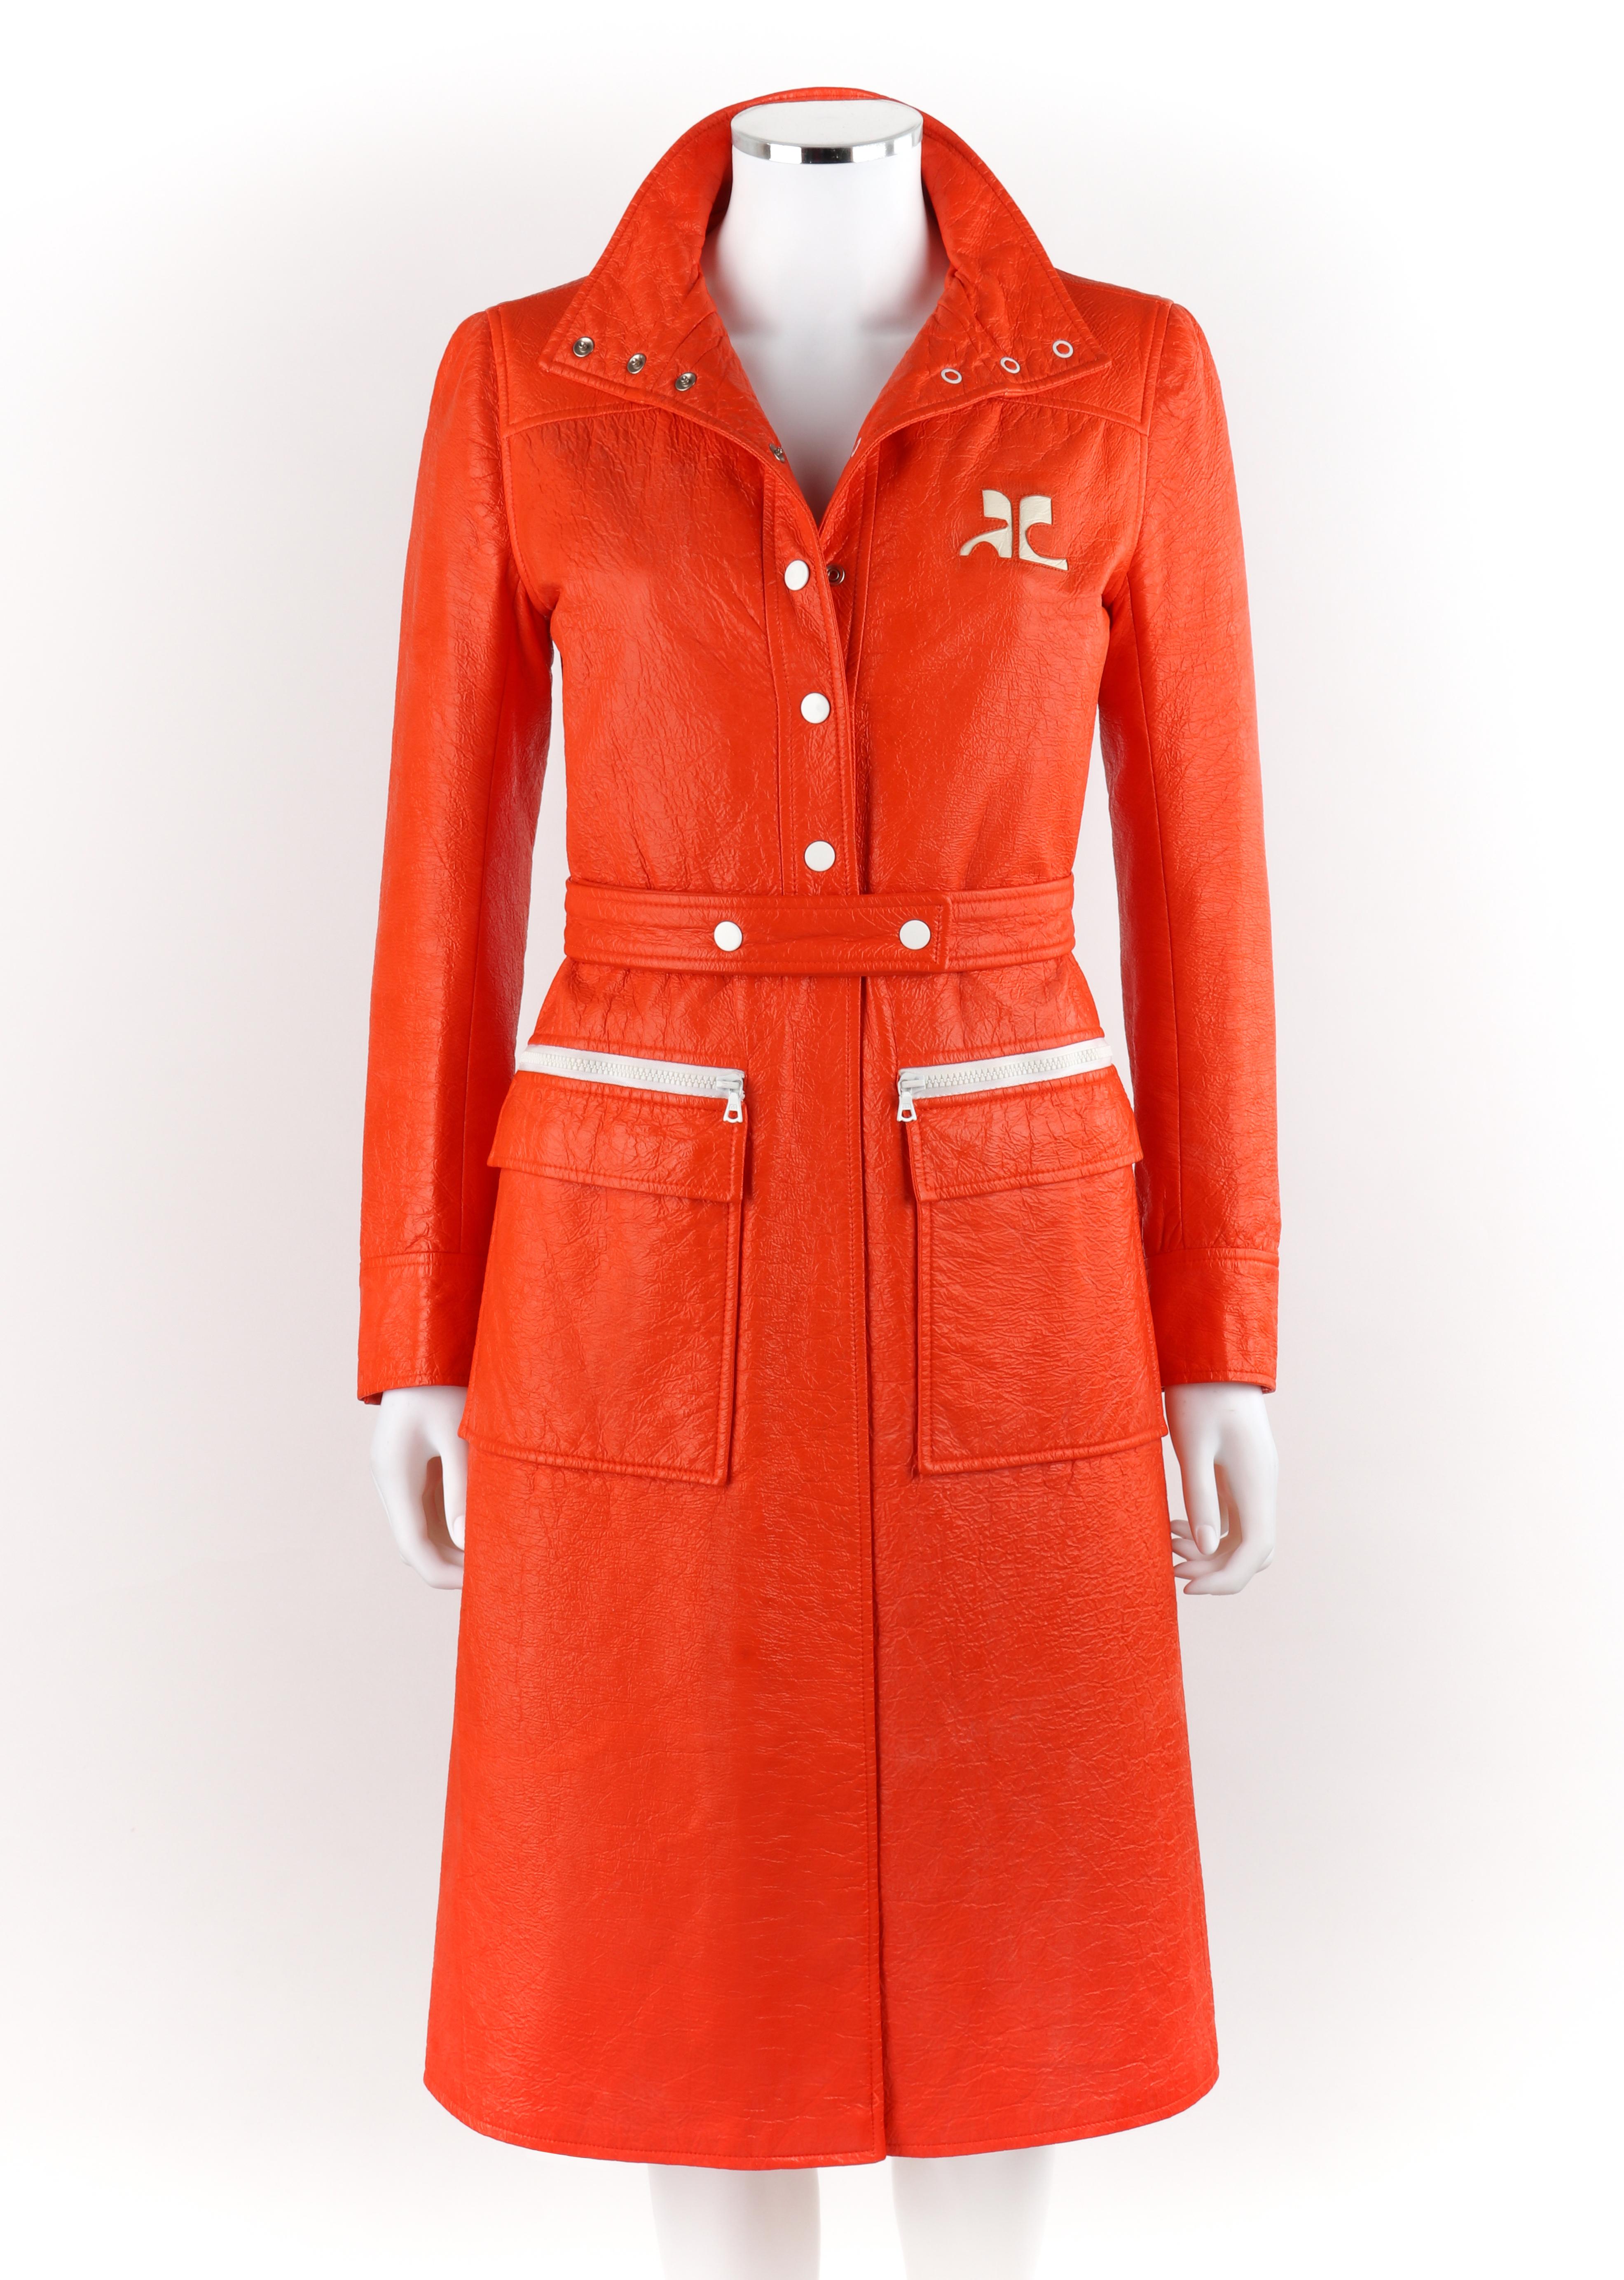 COURREGES c.1972 Orange Textured Vinyl Mod Signature Logo Trench Coat Jacket 
 
Circa: 1970’s
Label(s): Courreges Paris 
Style: Trench Coat
Color(s): Orange & White
Lined: Yes
Marked Fabric Content: Exterior: 85% Cotton; 15% Spandex. Lining: 100%